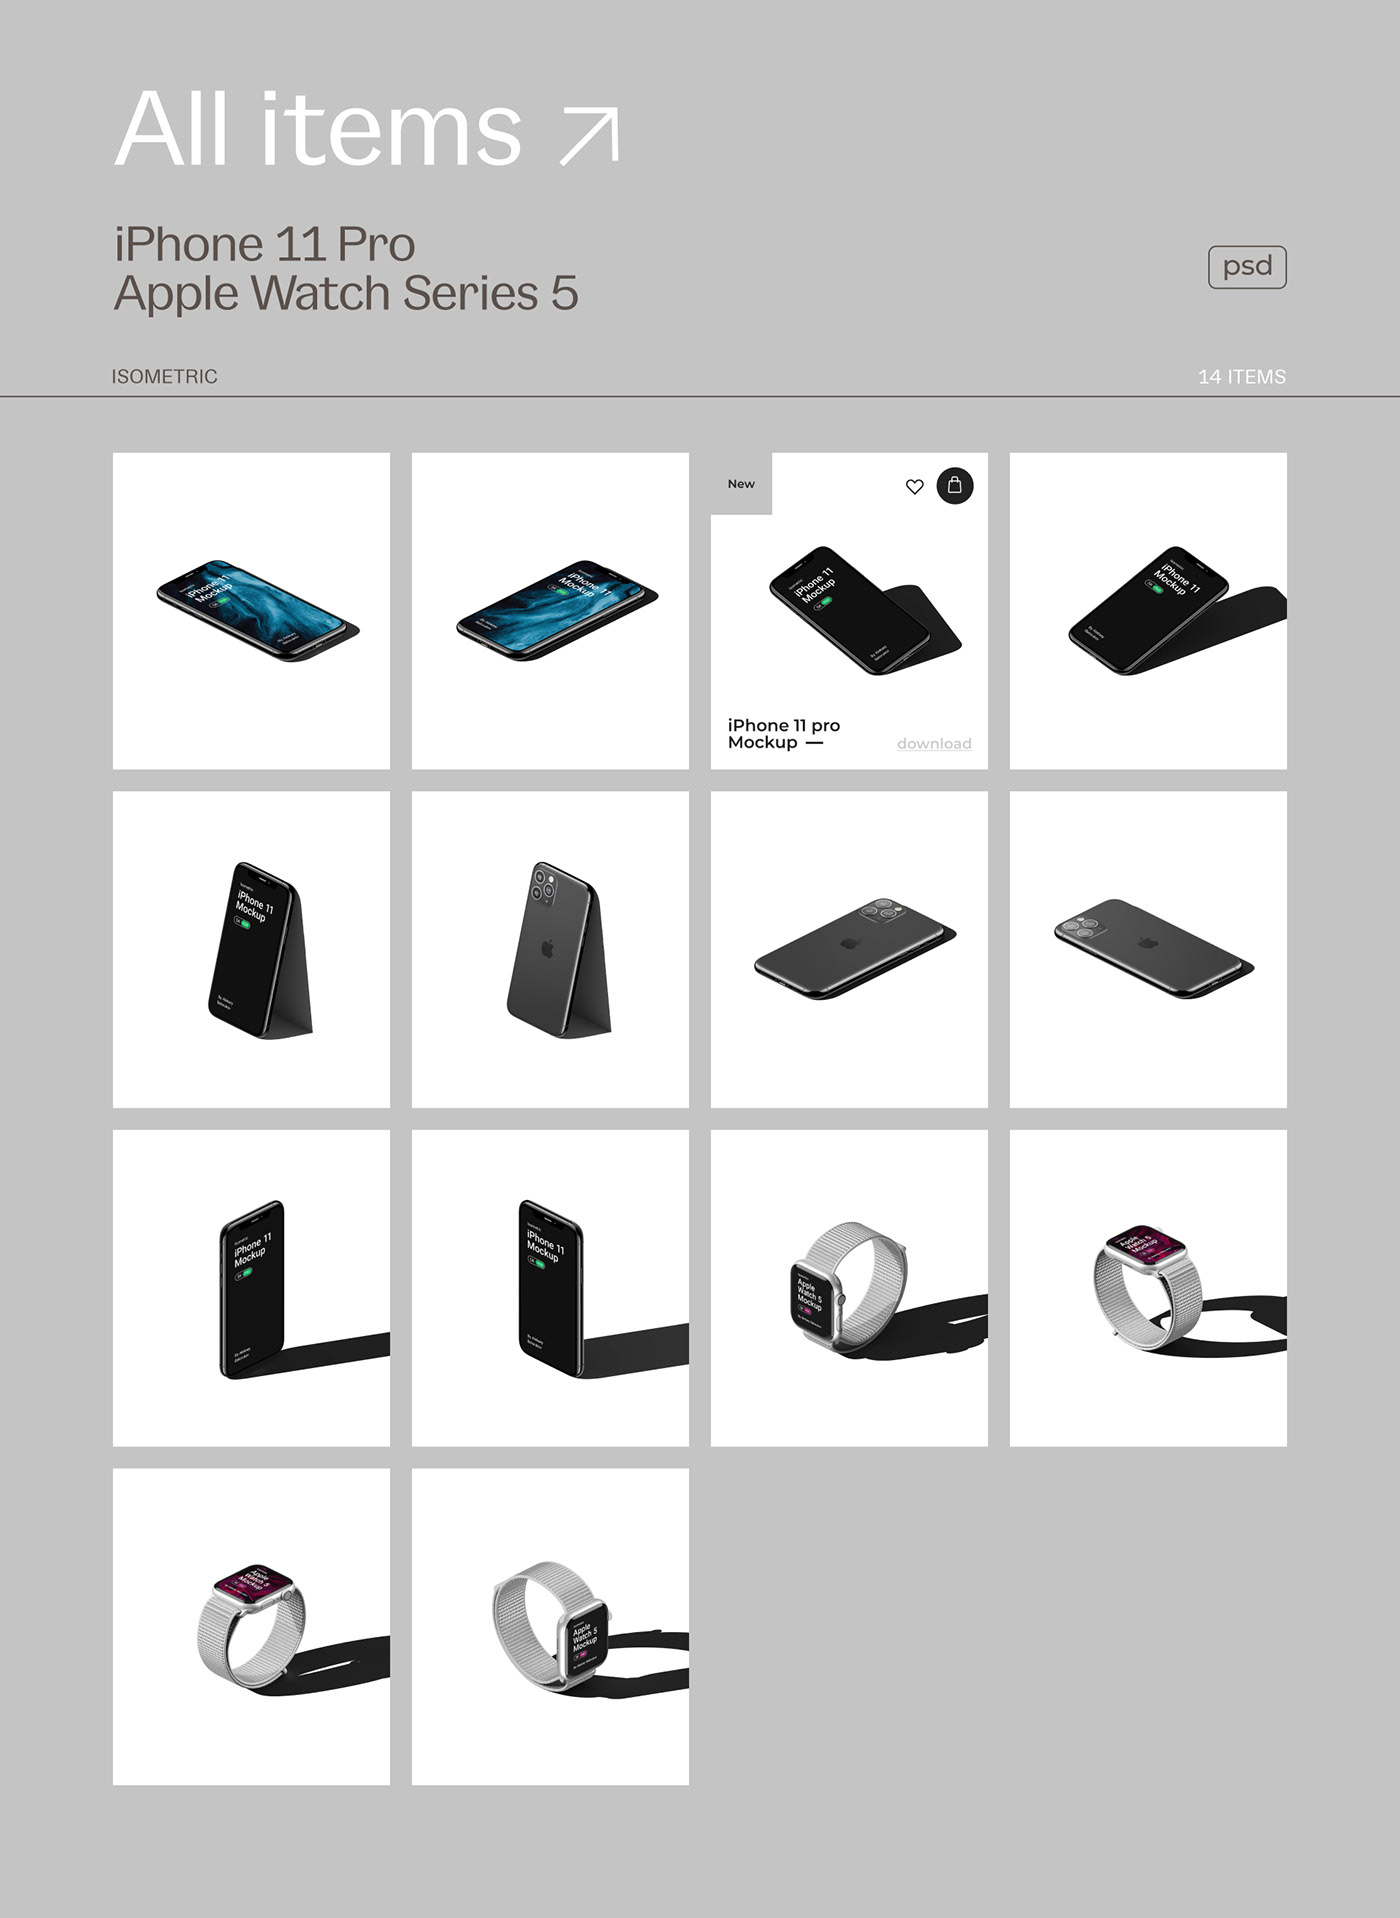 Apple Watch Series Device Mockup free iphone 11 free mockup  imac mockup iPad pro mockup macbook pro 16 Pro Display XDR iPhone 12 Pro iphone 13 pro